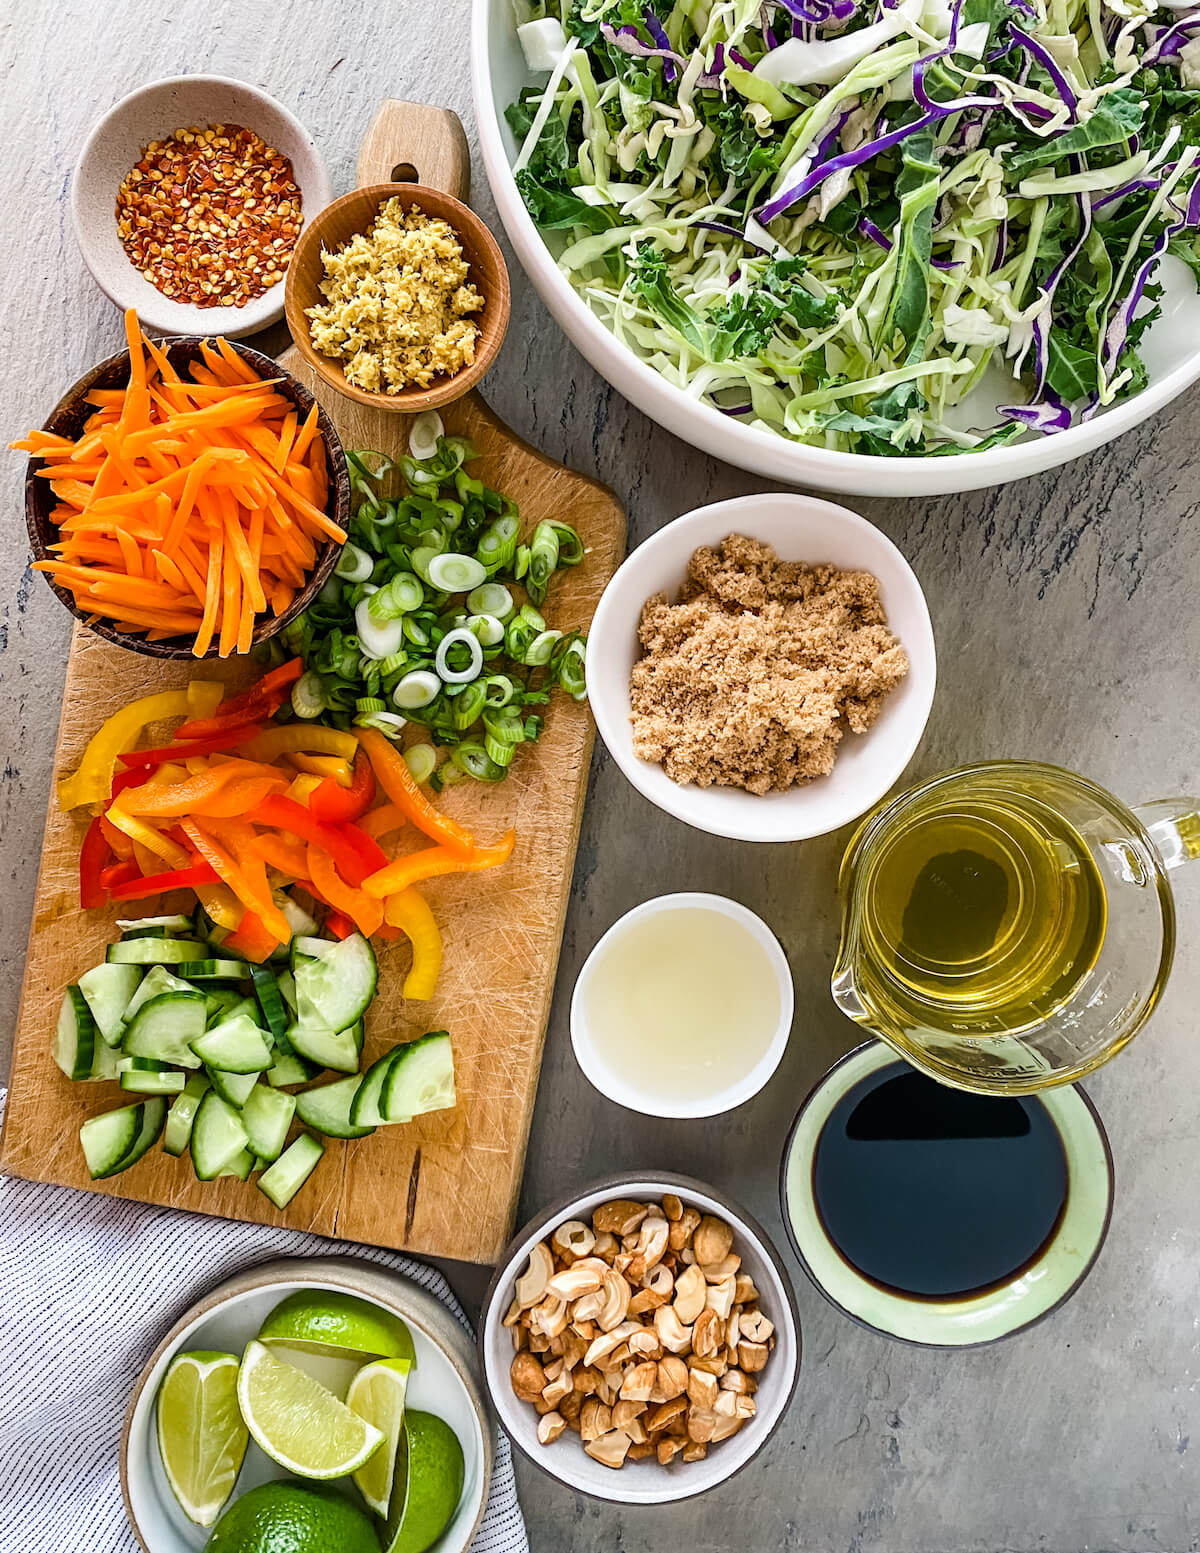 Asian crunch salad ingredients